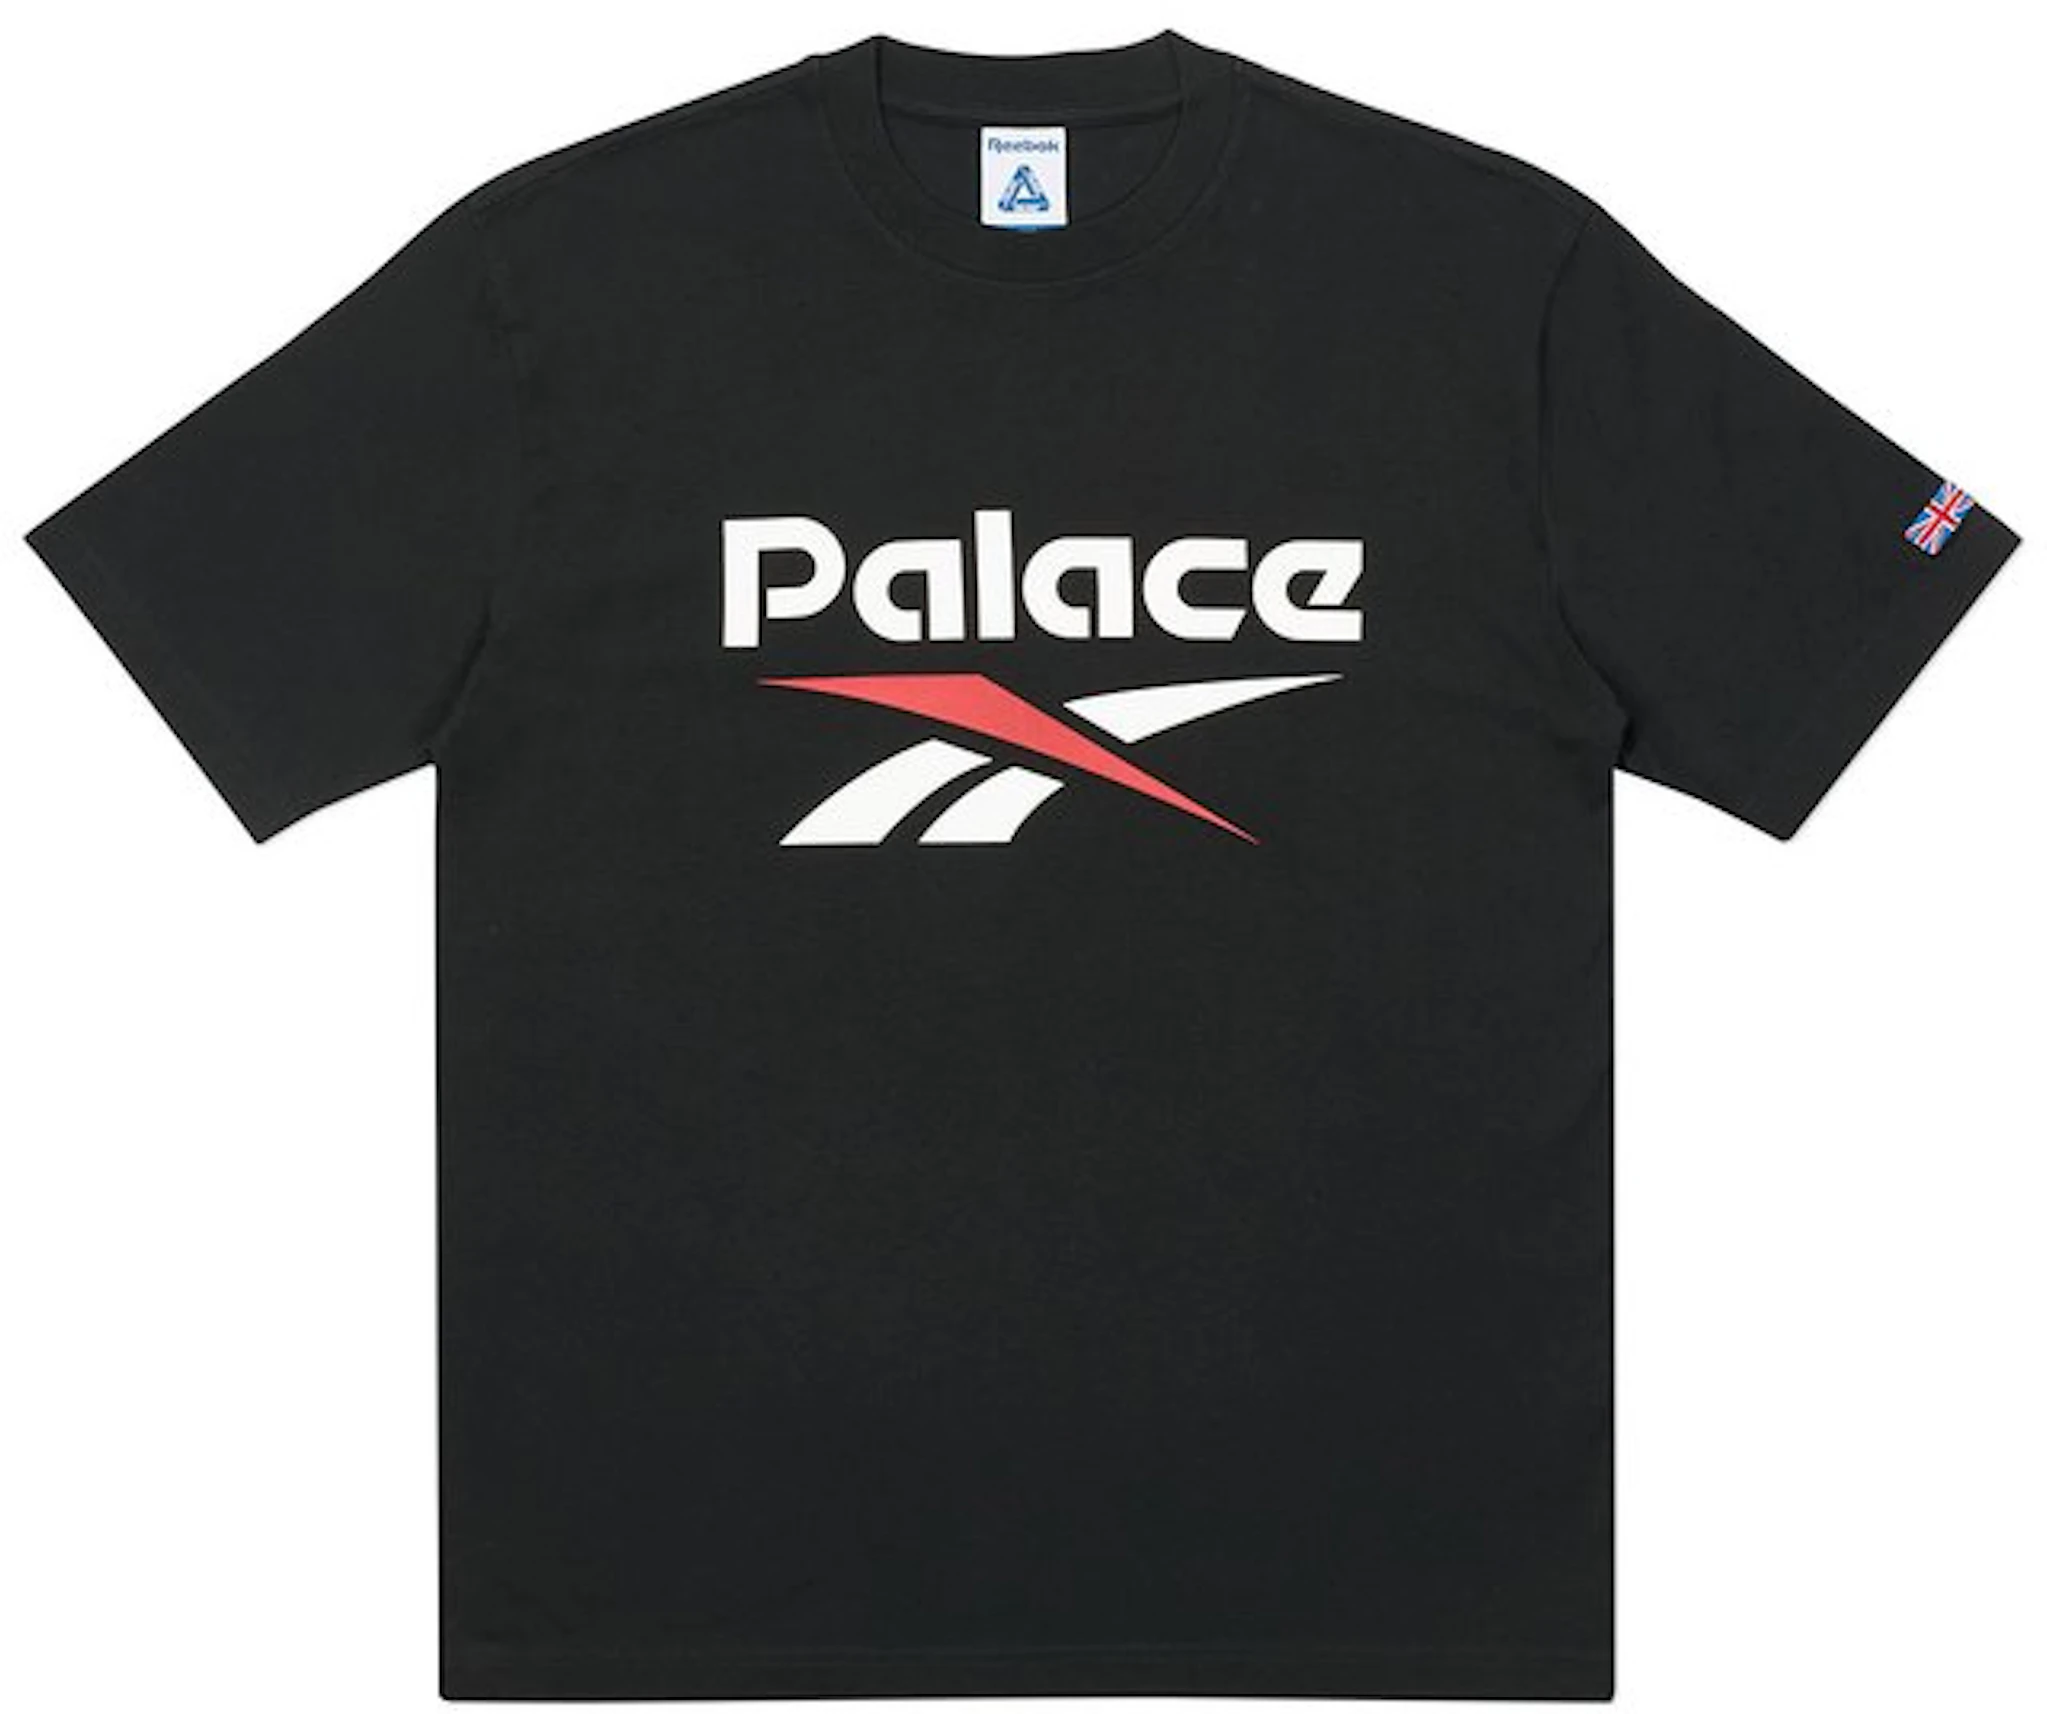 Palace T-Shirt Black - FW20 -